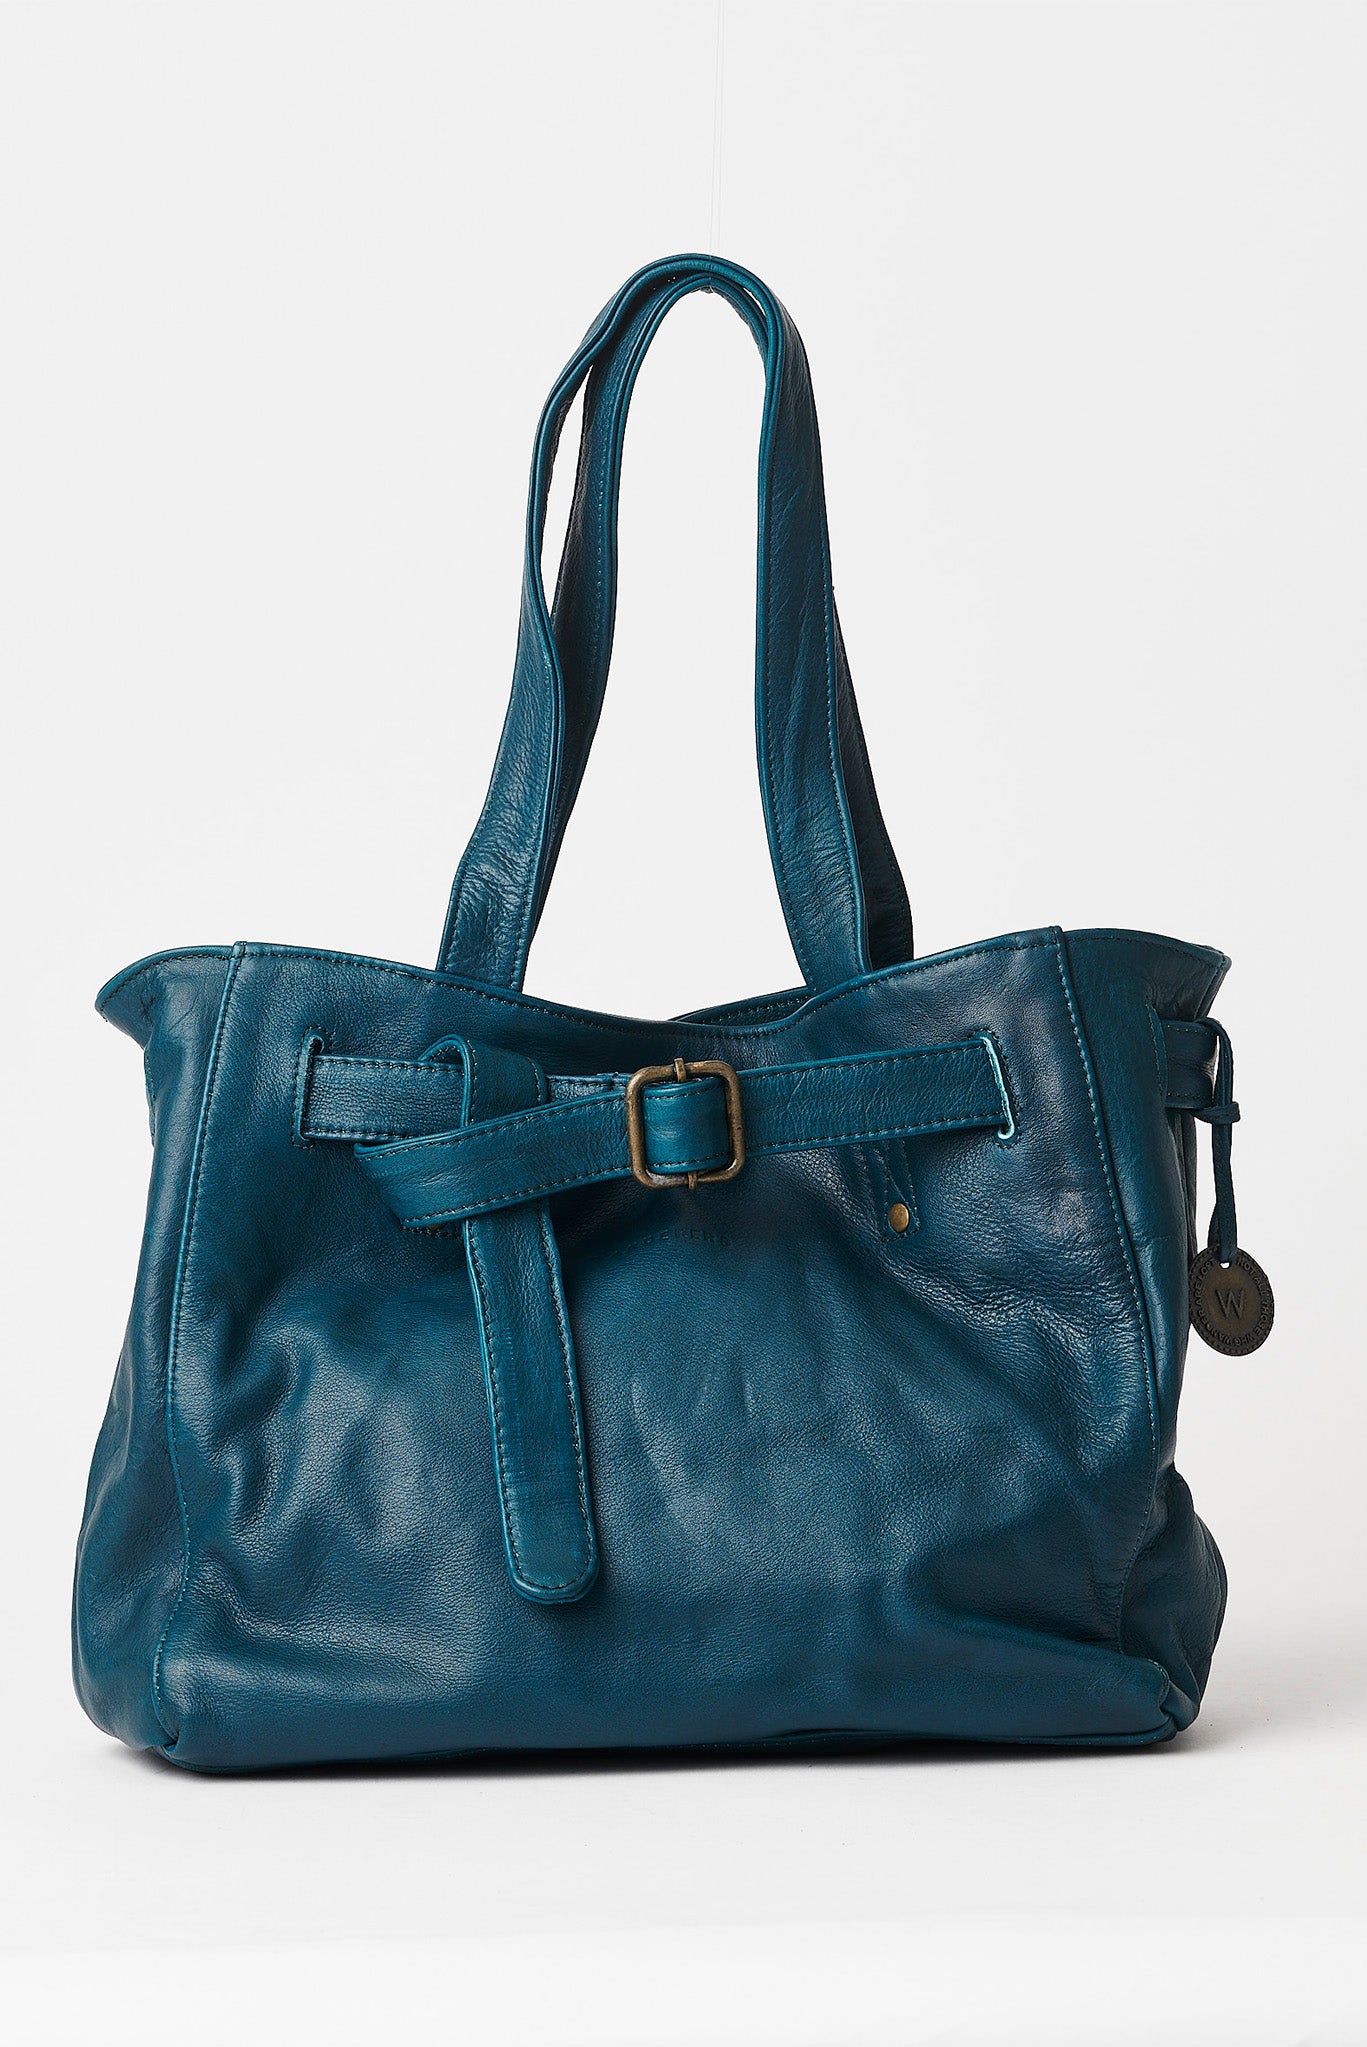 Green Leather Bag, Classic Hobo Purse, Casual Handbag, Anabella - Fgalaze  Genuine Leather Bags & Accessories